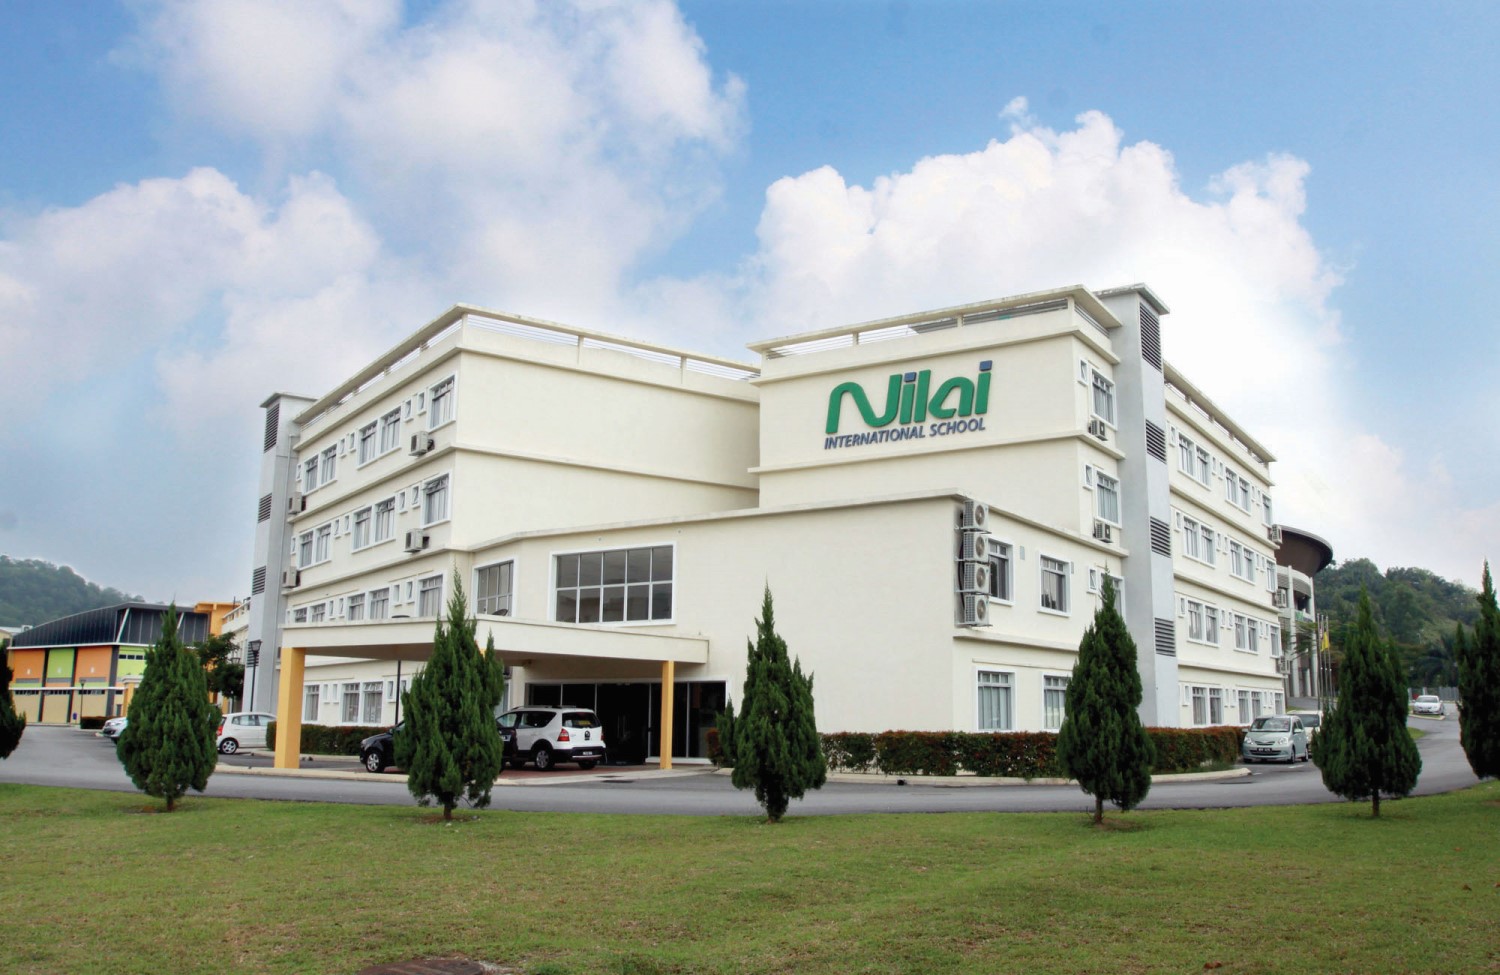 Nilai International School